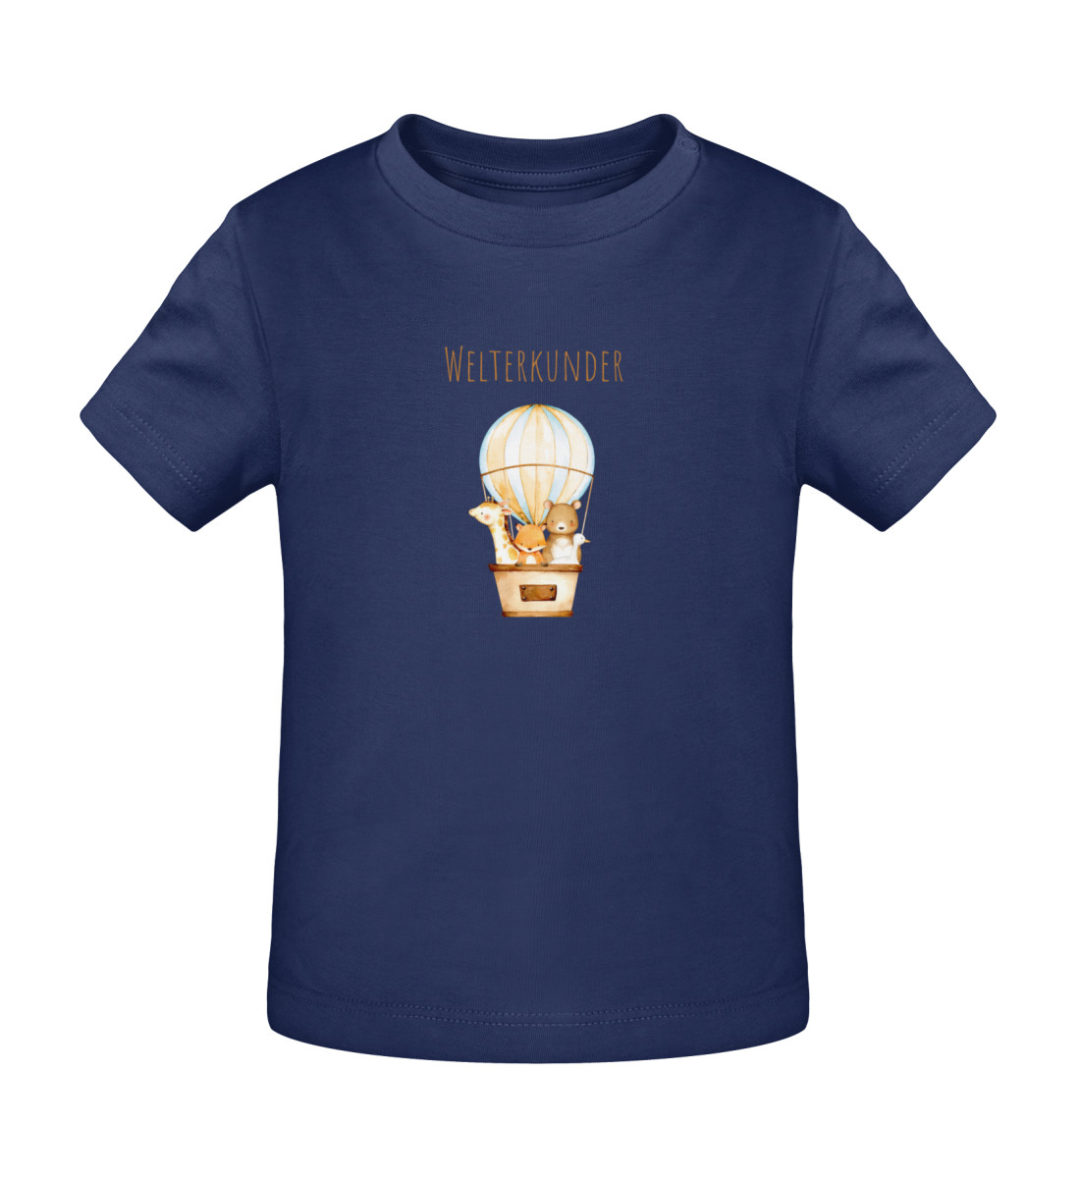 Welterkunder - Baby Creator T-Shirt ST/ST-6057